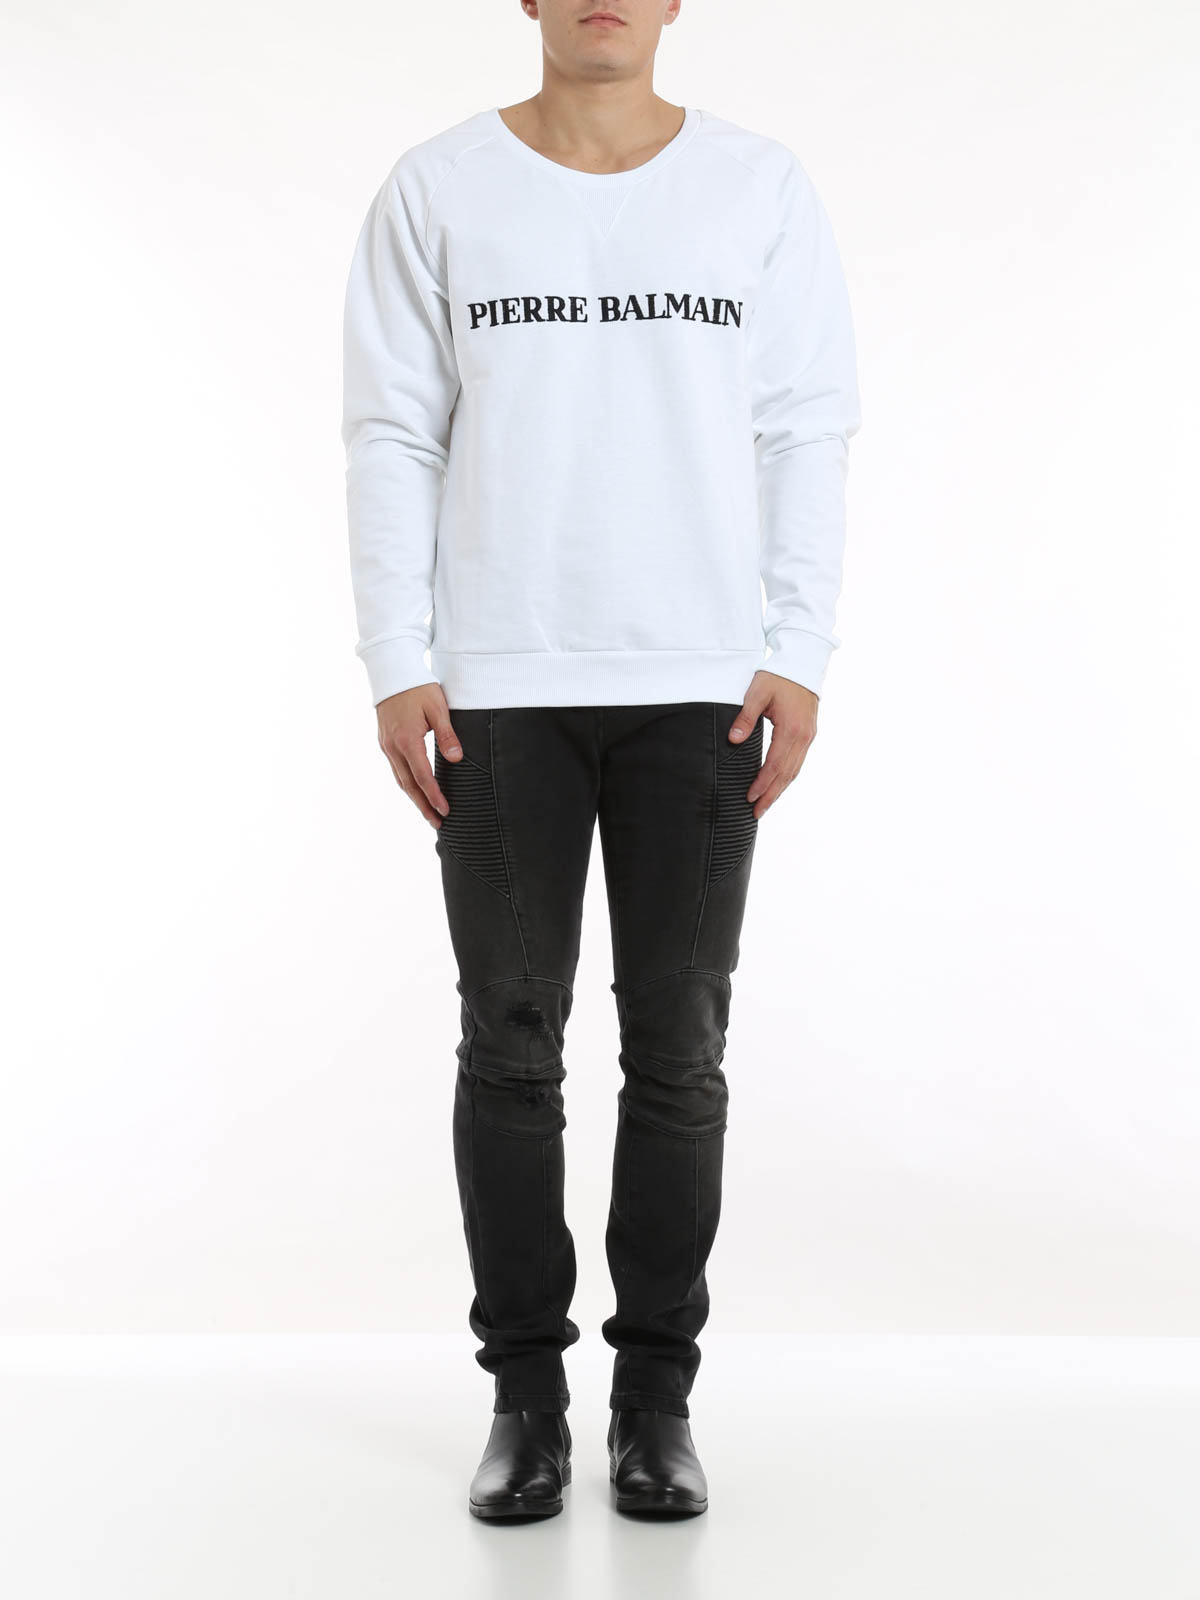 satire Oprecht Kruipen Sweatshirts & Sweaters Pierre Balmain - Crew neck sweater with logo -  HP6380S1380